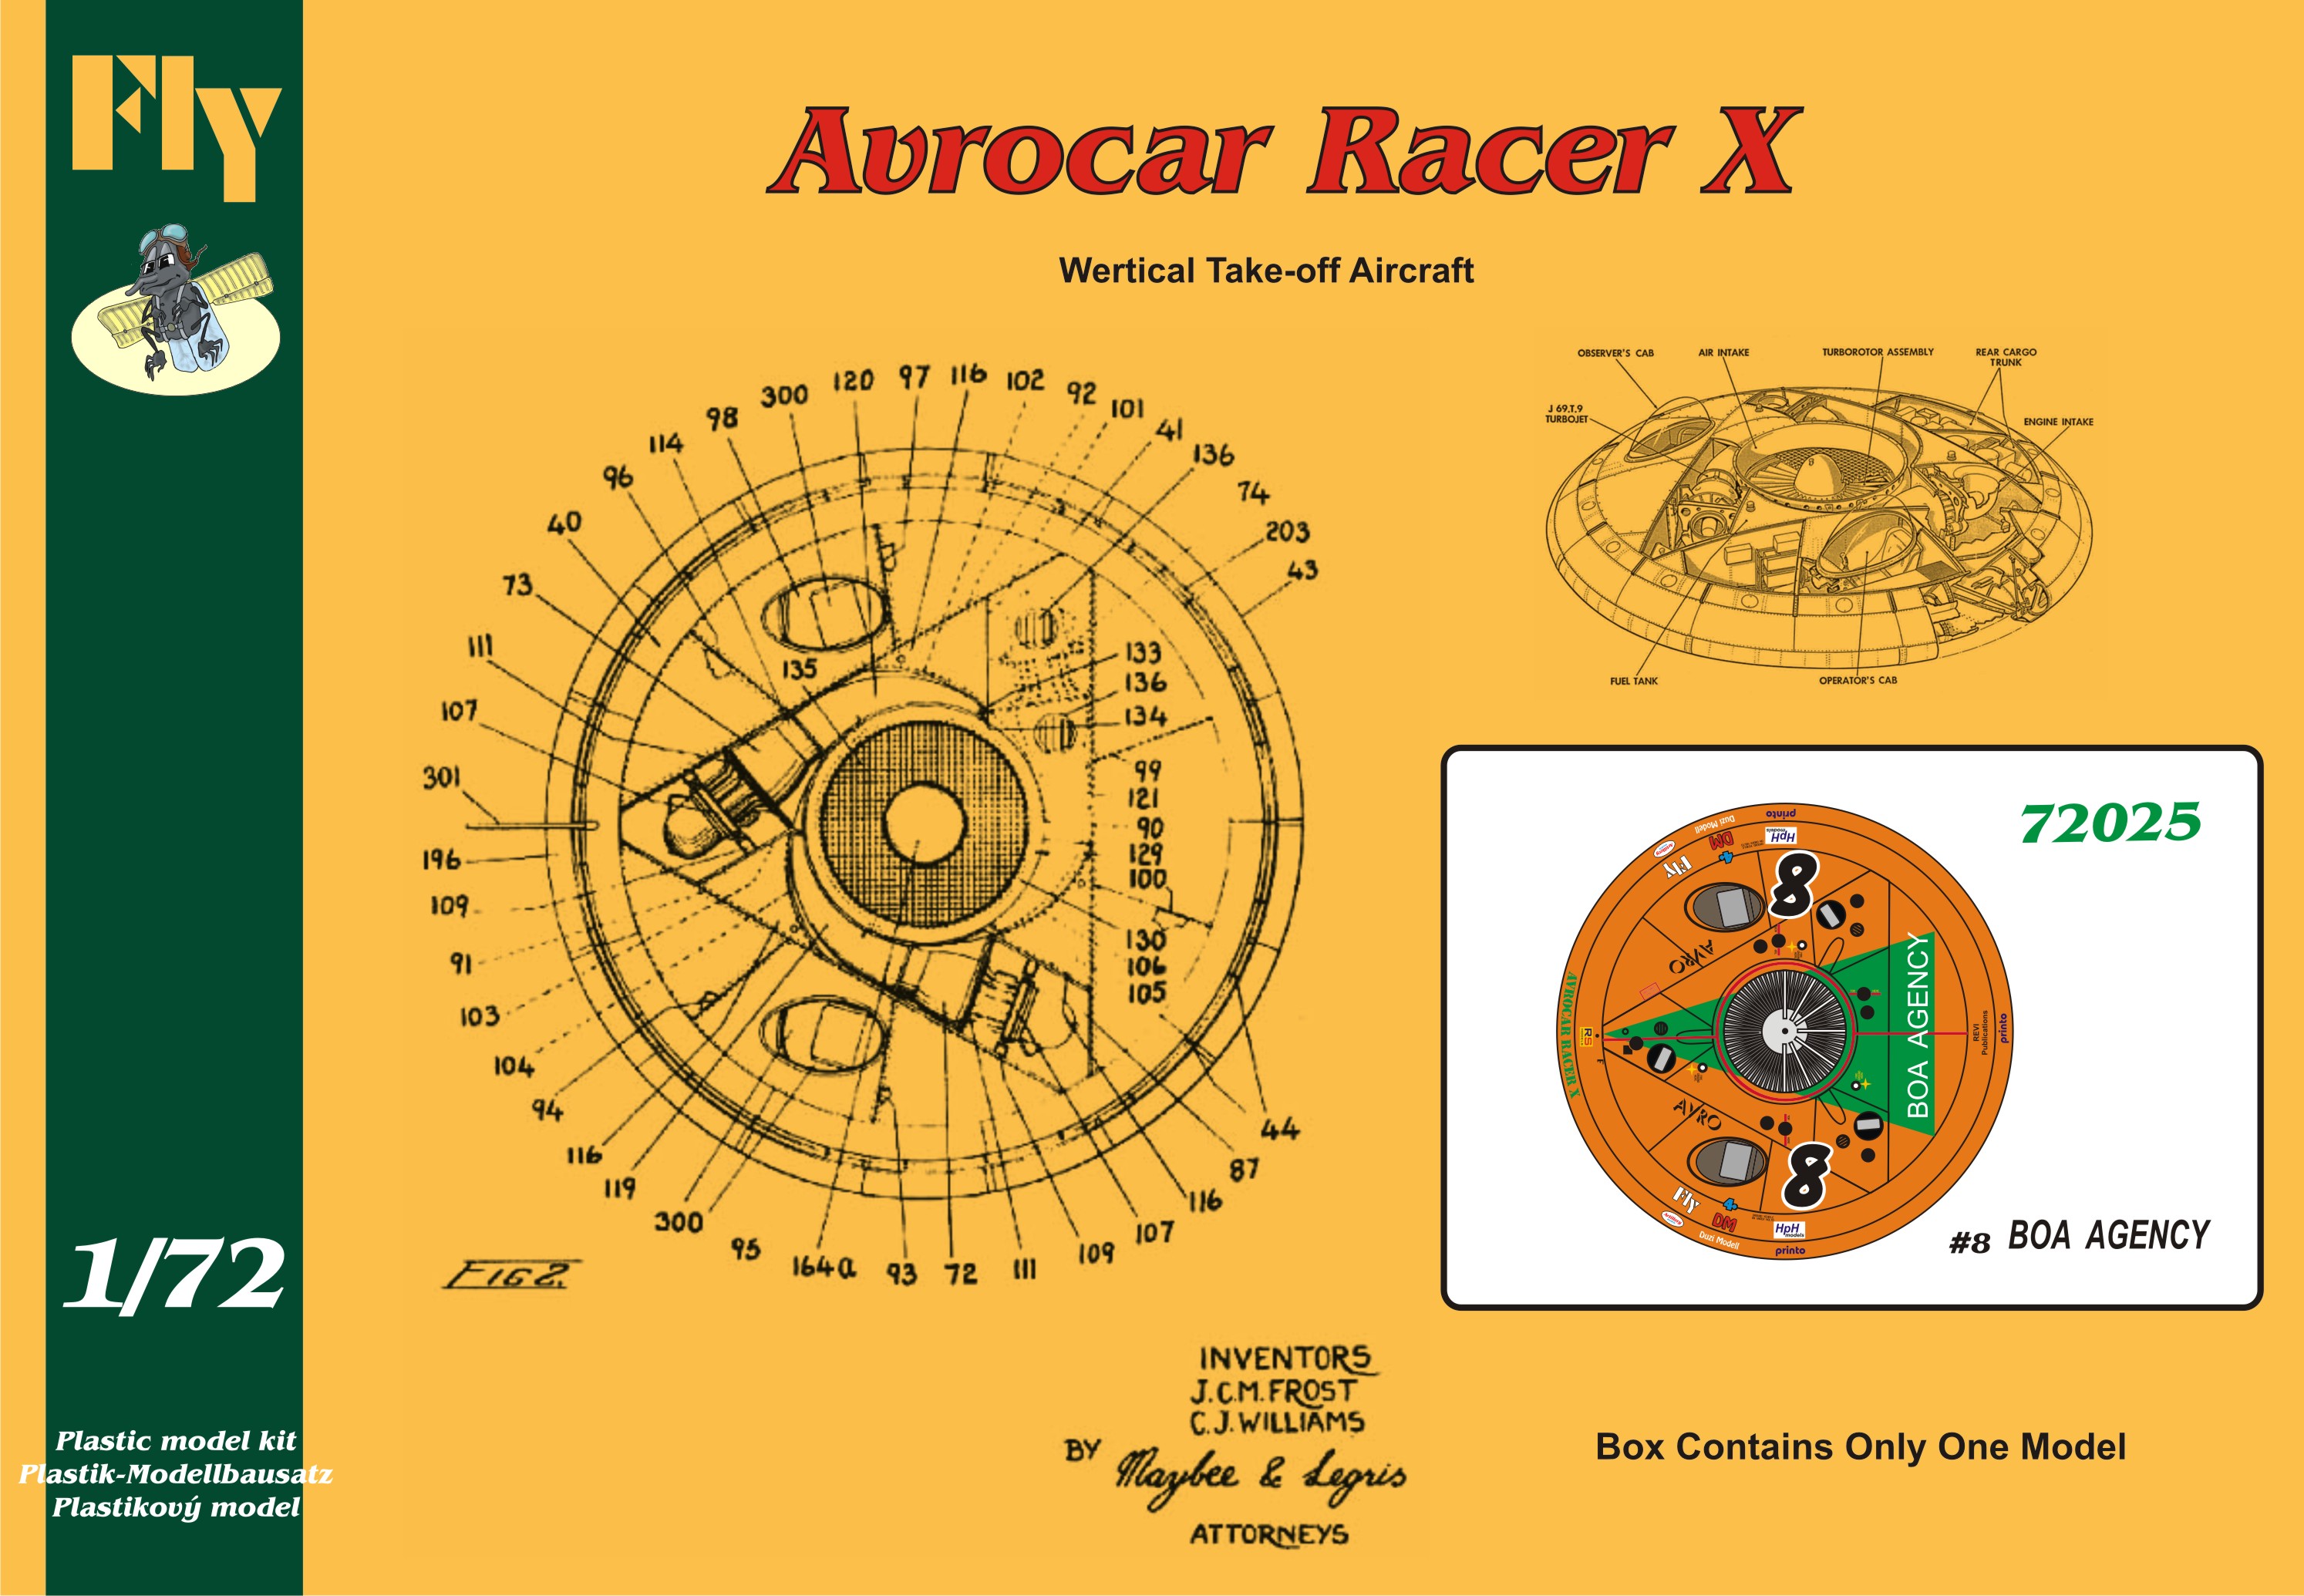 Avrocar Racer X Boa Agency